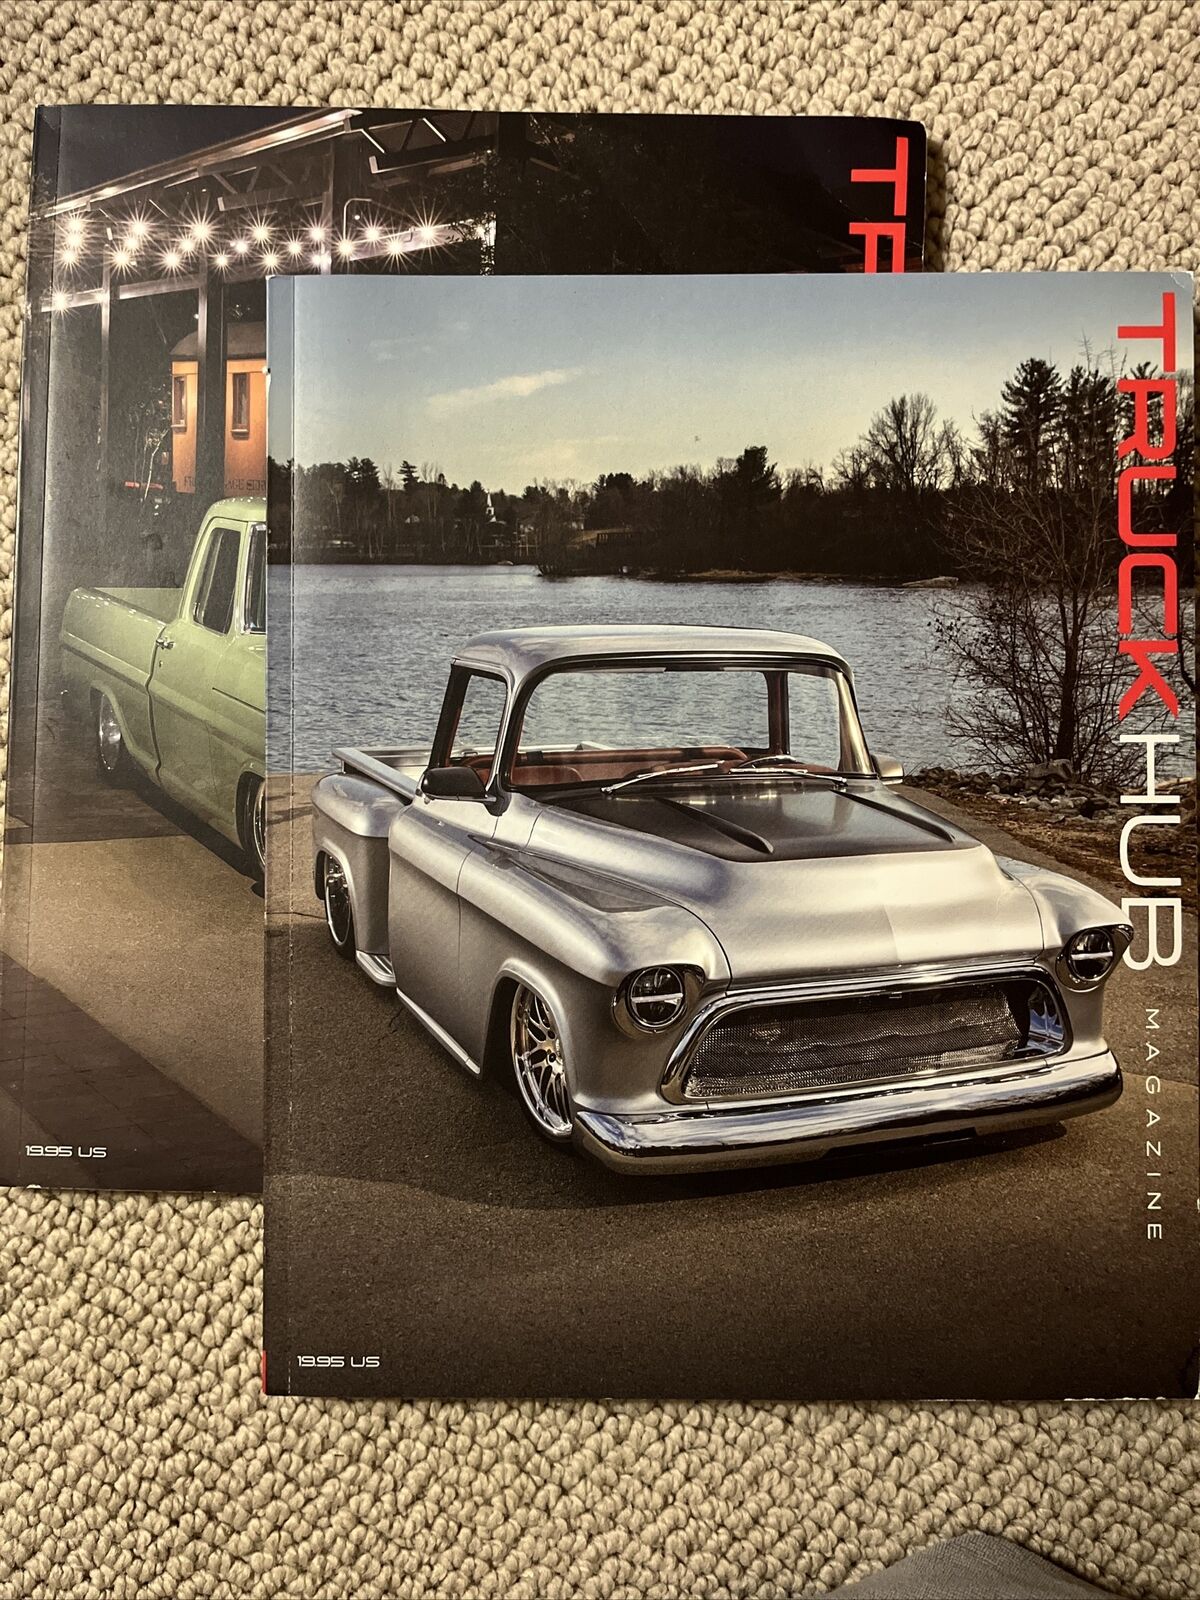 Truck Hub Magazine Fall/Winter 2020 Hot Rod Lot of 2 (Both Volume 2)